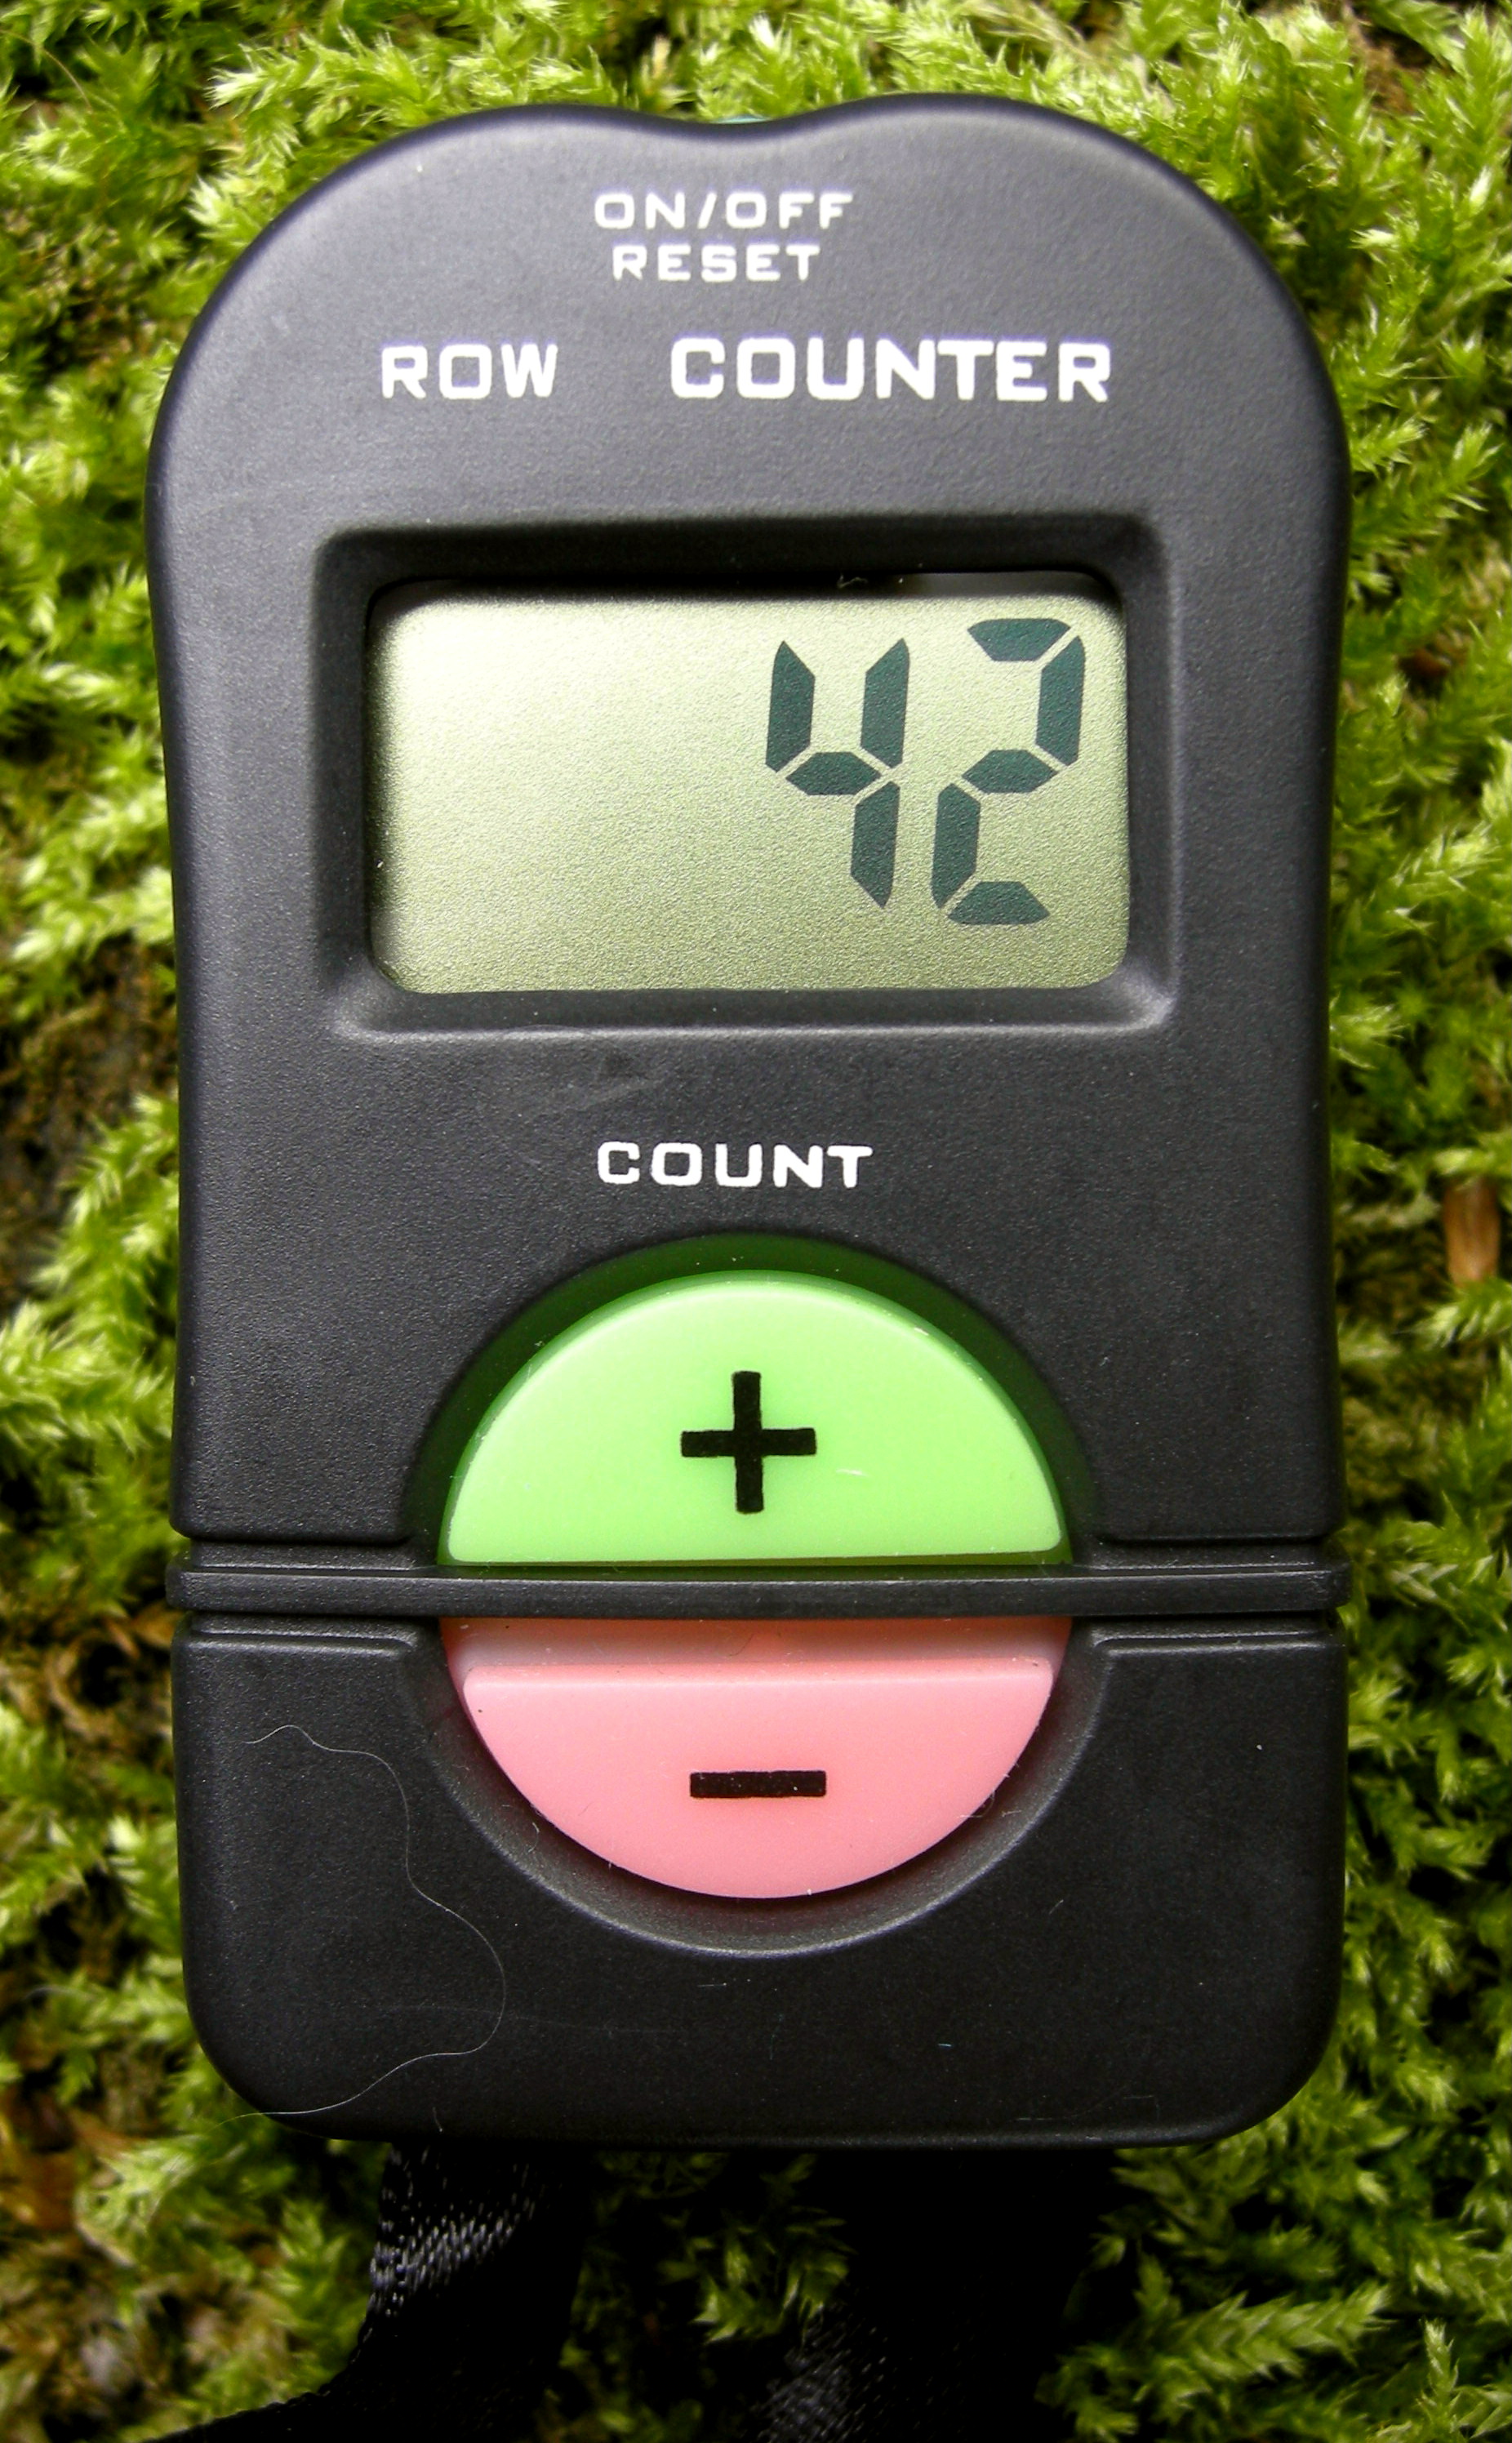 File:Digital tally counter.jpg - Wikipedia